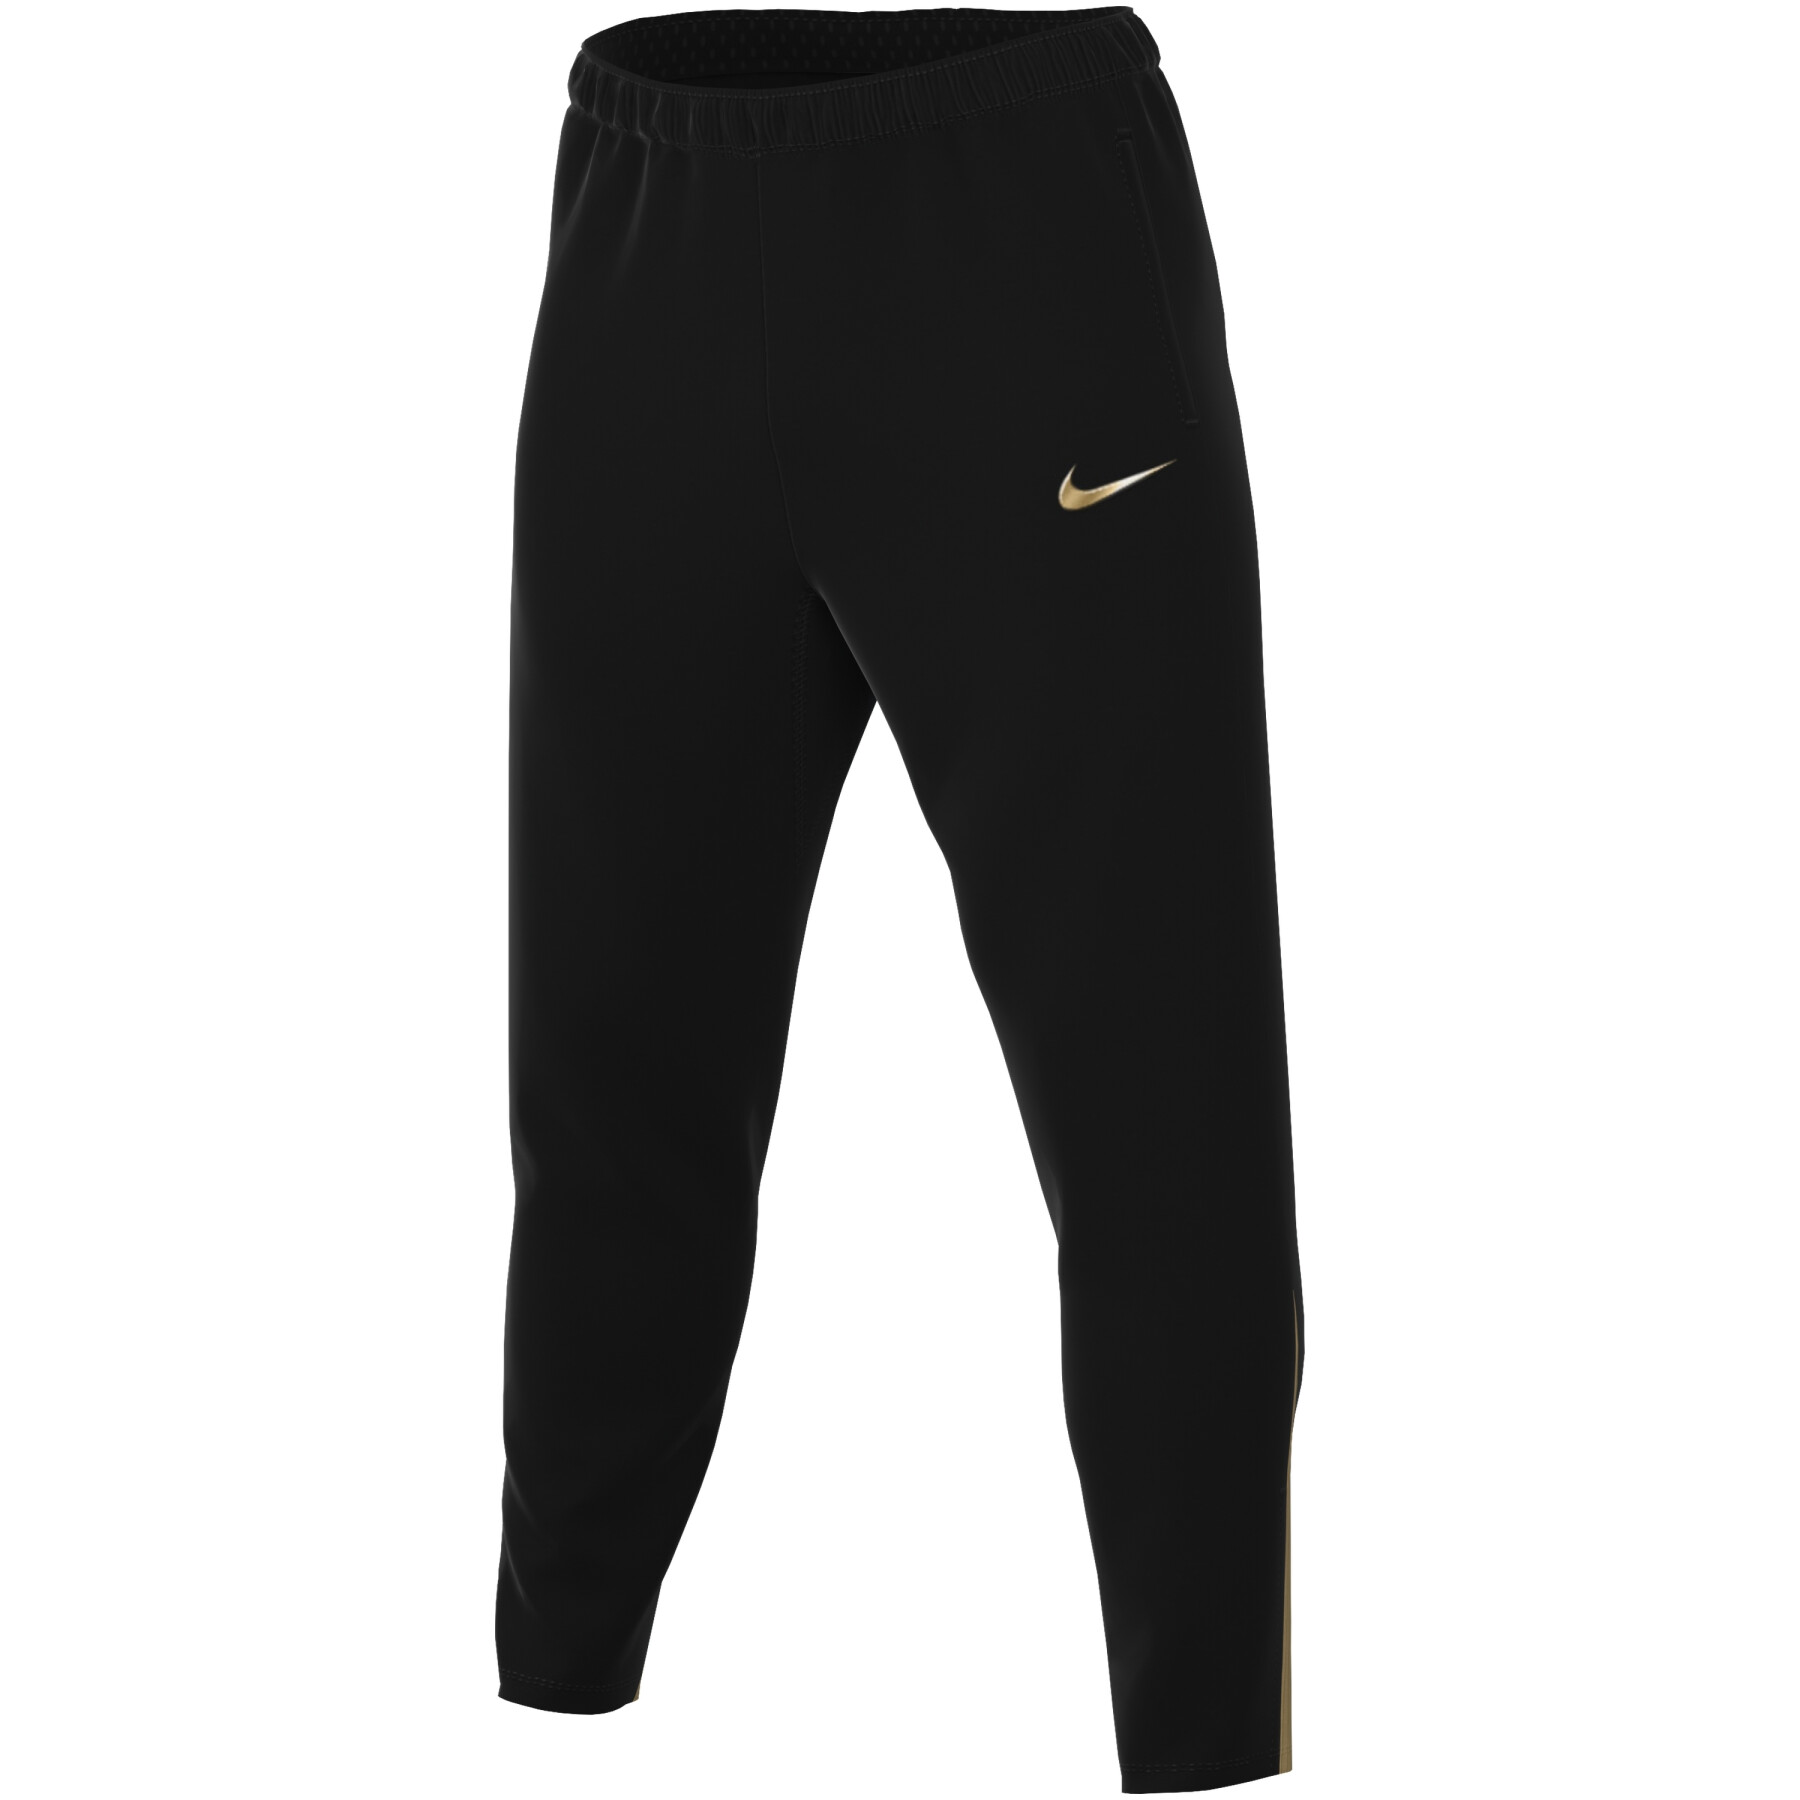 Training pants Nike Strike